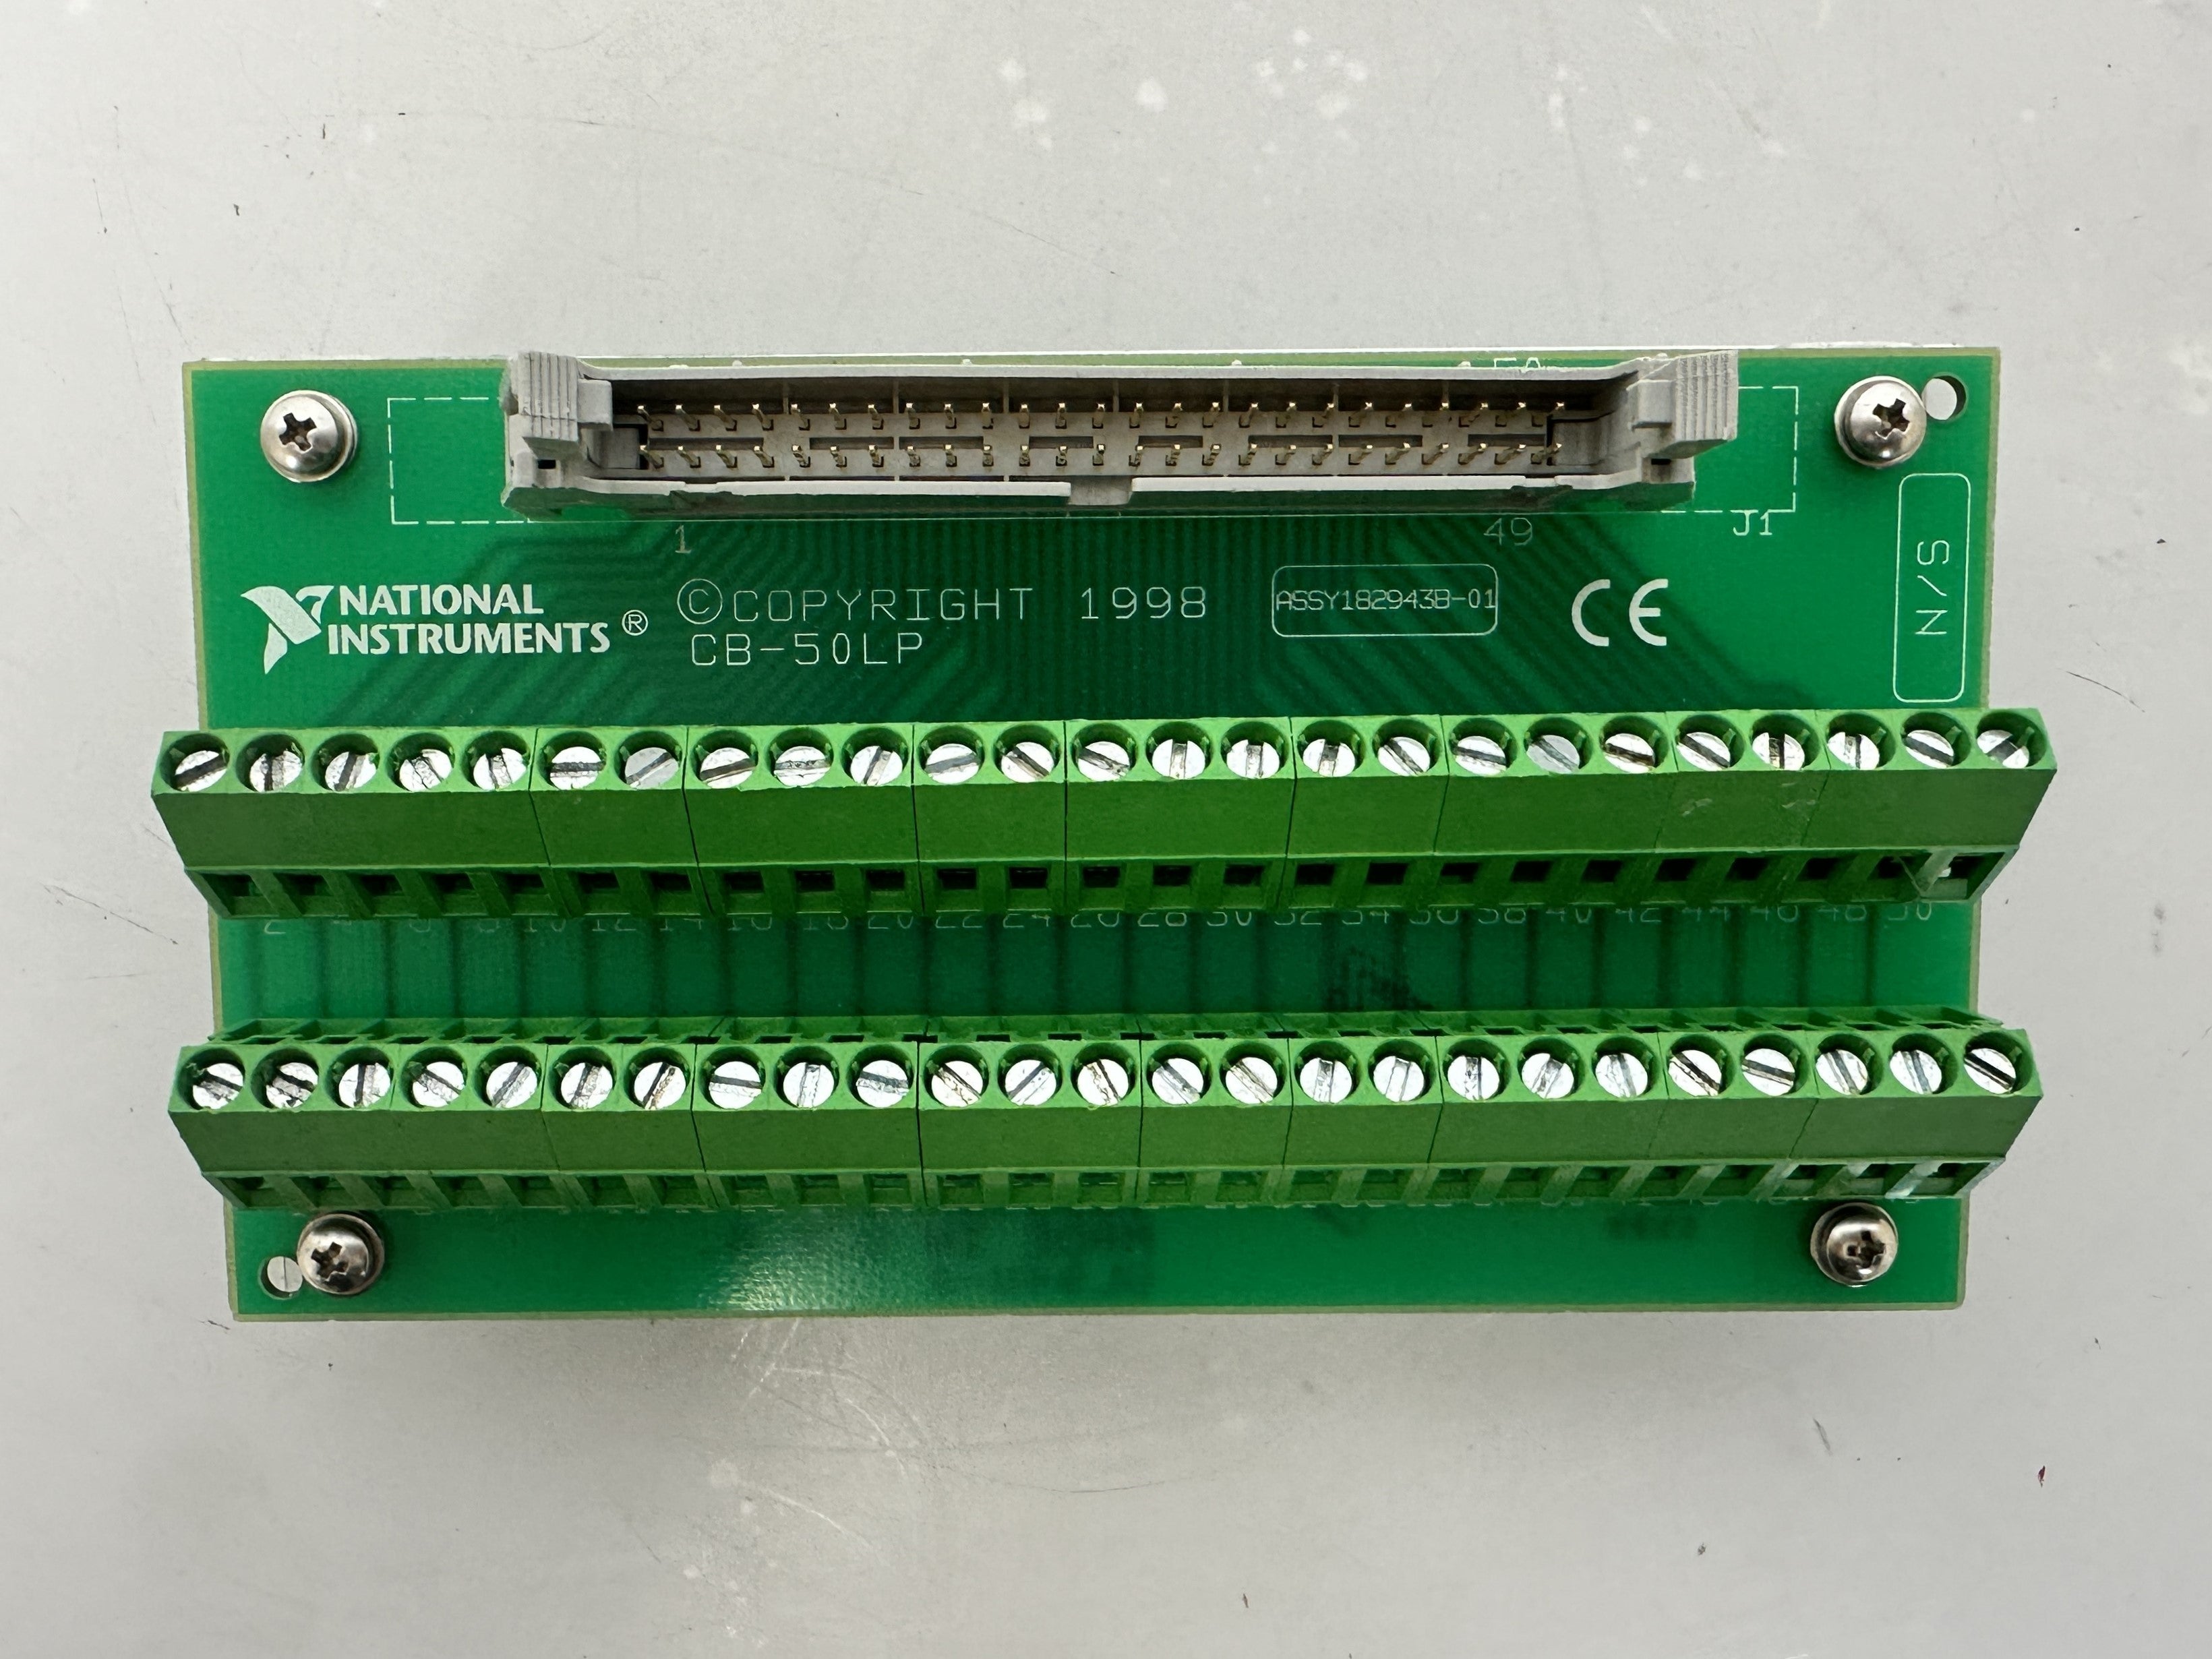 National Instruments CB-50LP (182943B-01) I/O Connector Block